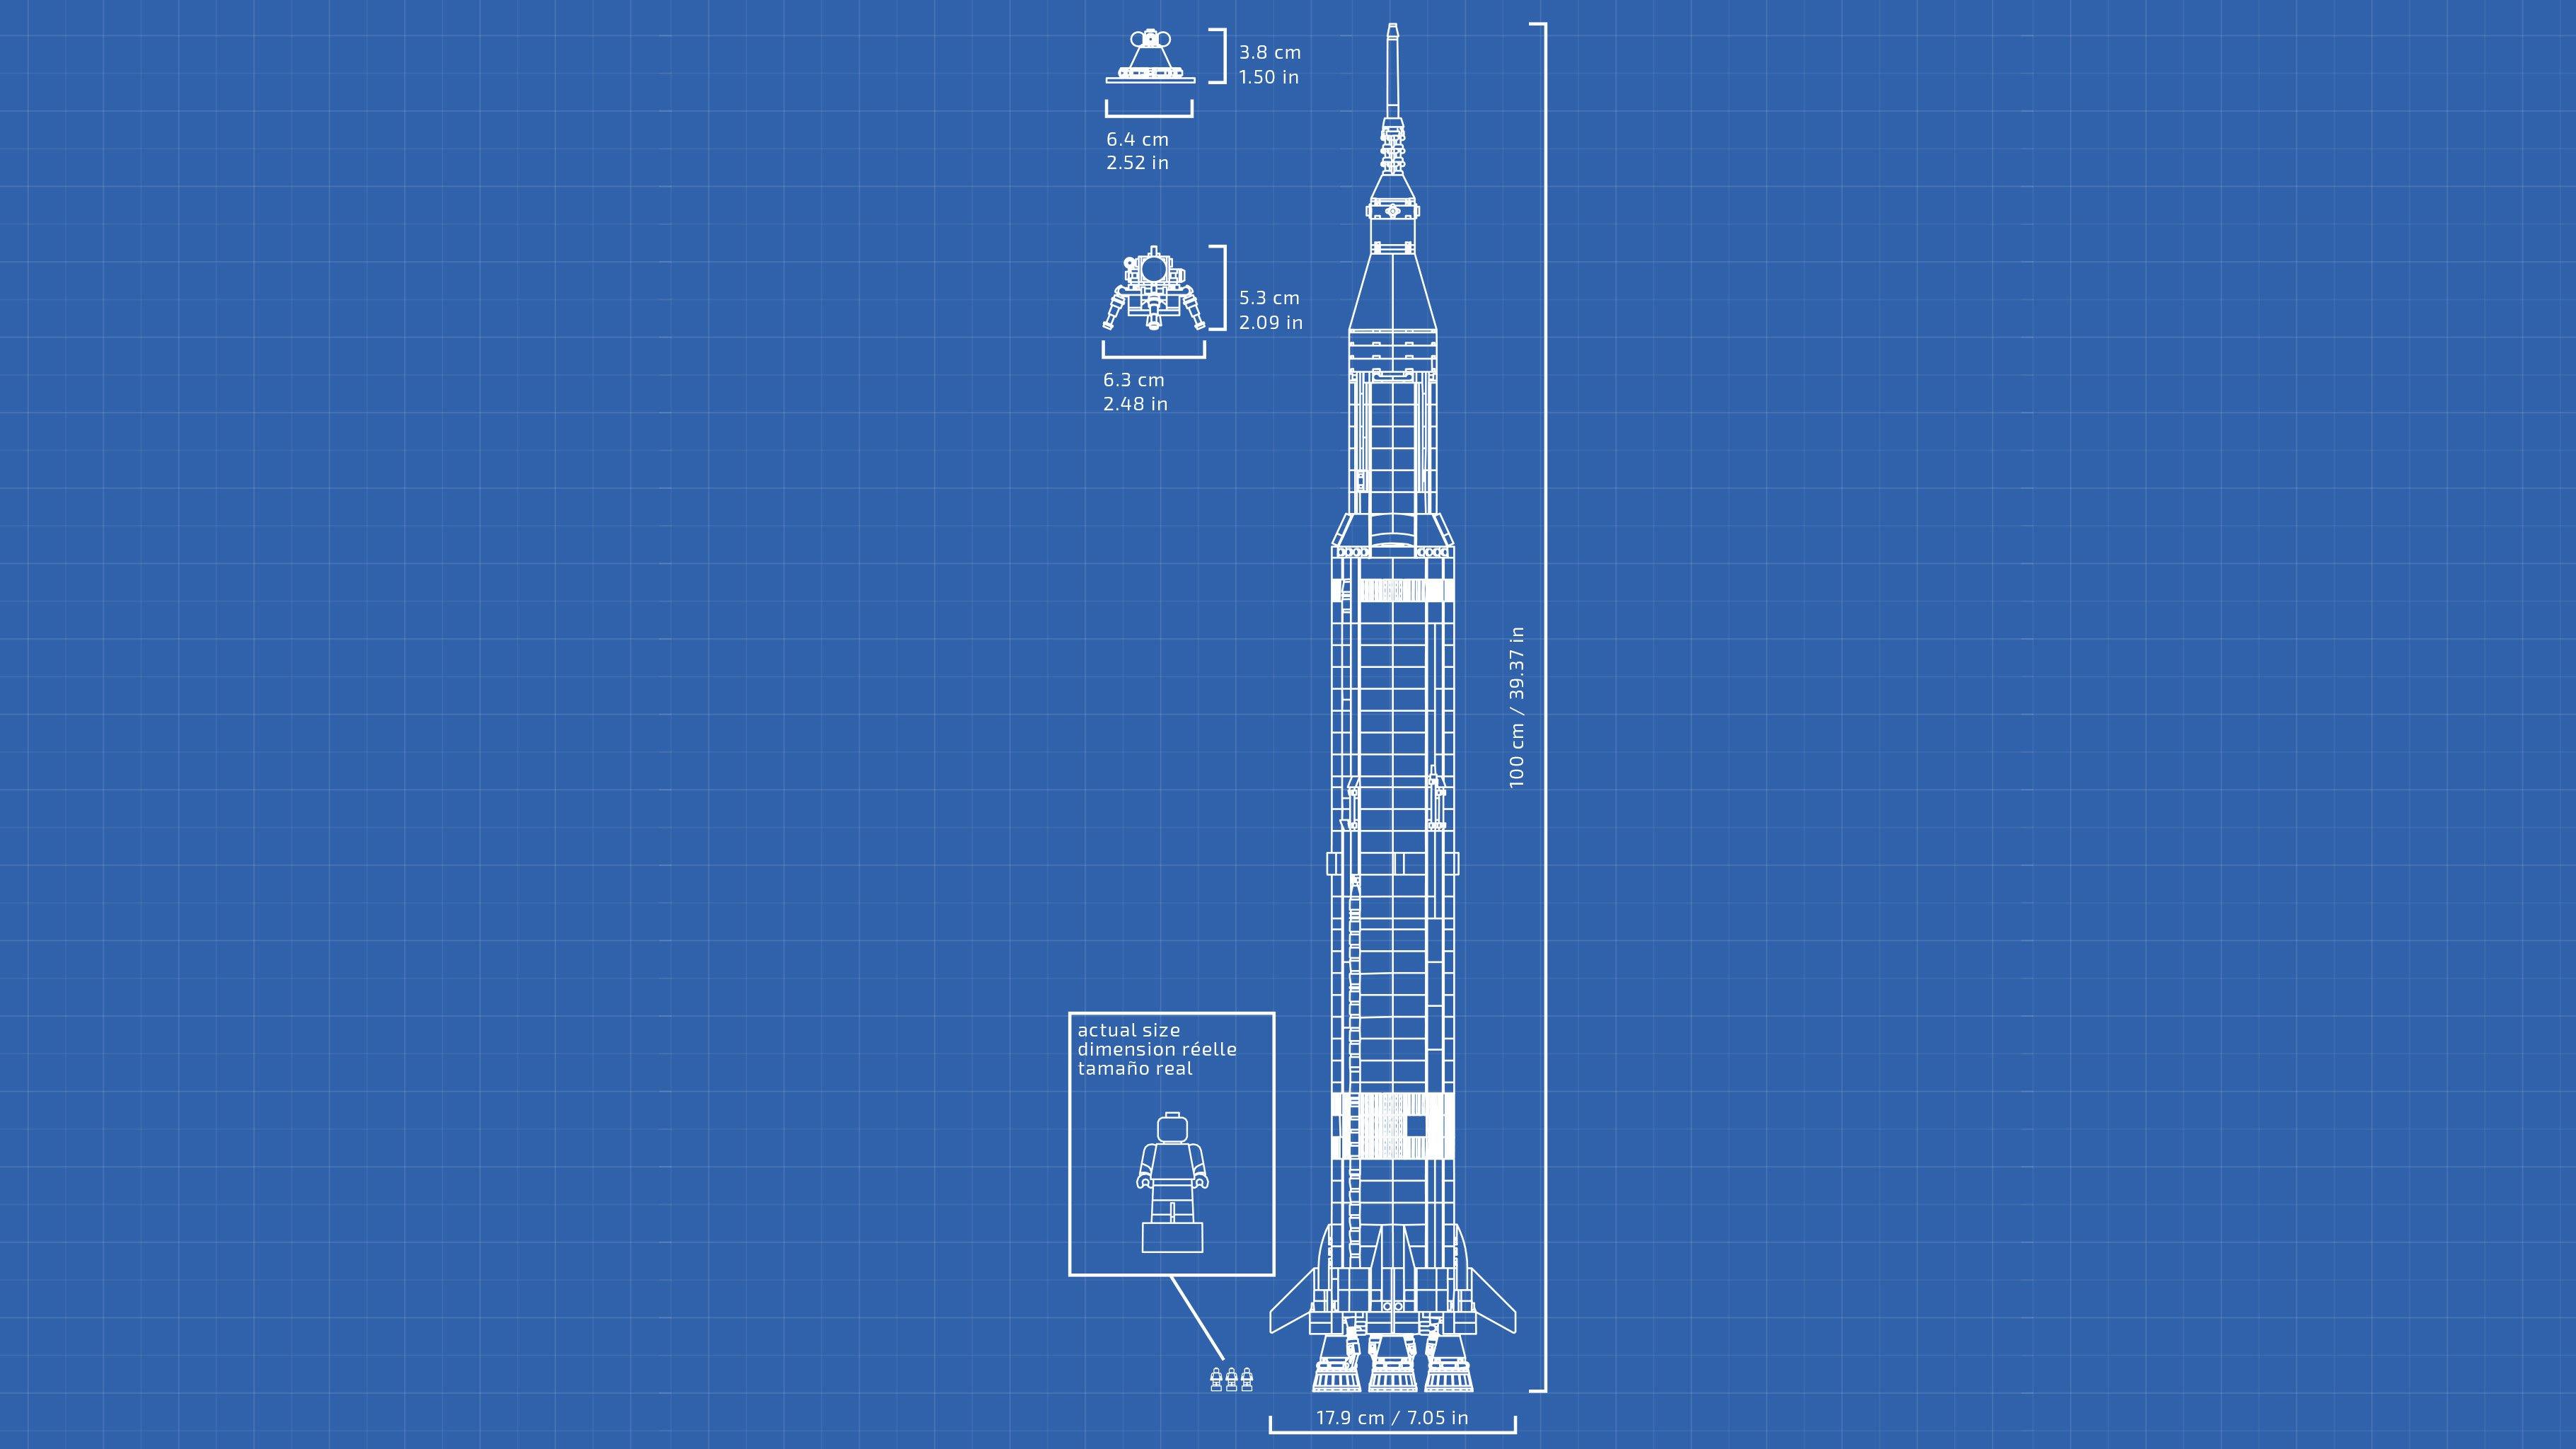 LEGO® NASA Apollo Saturn V - LEGO® Store Slovenija